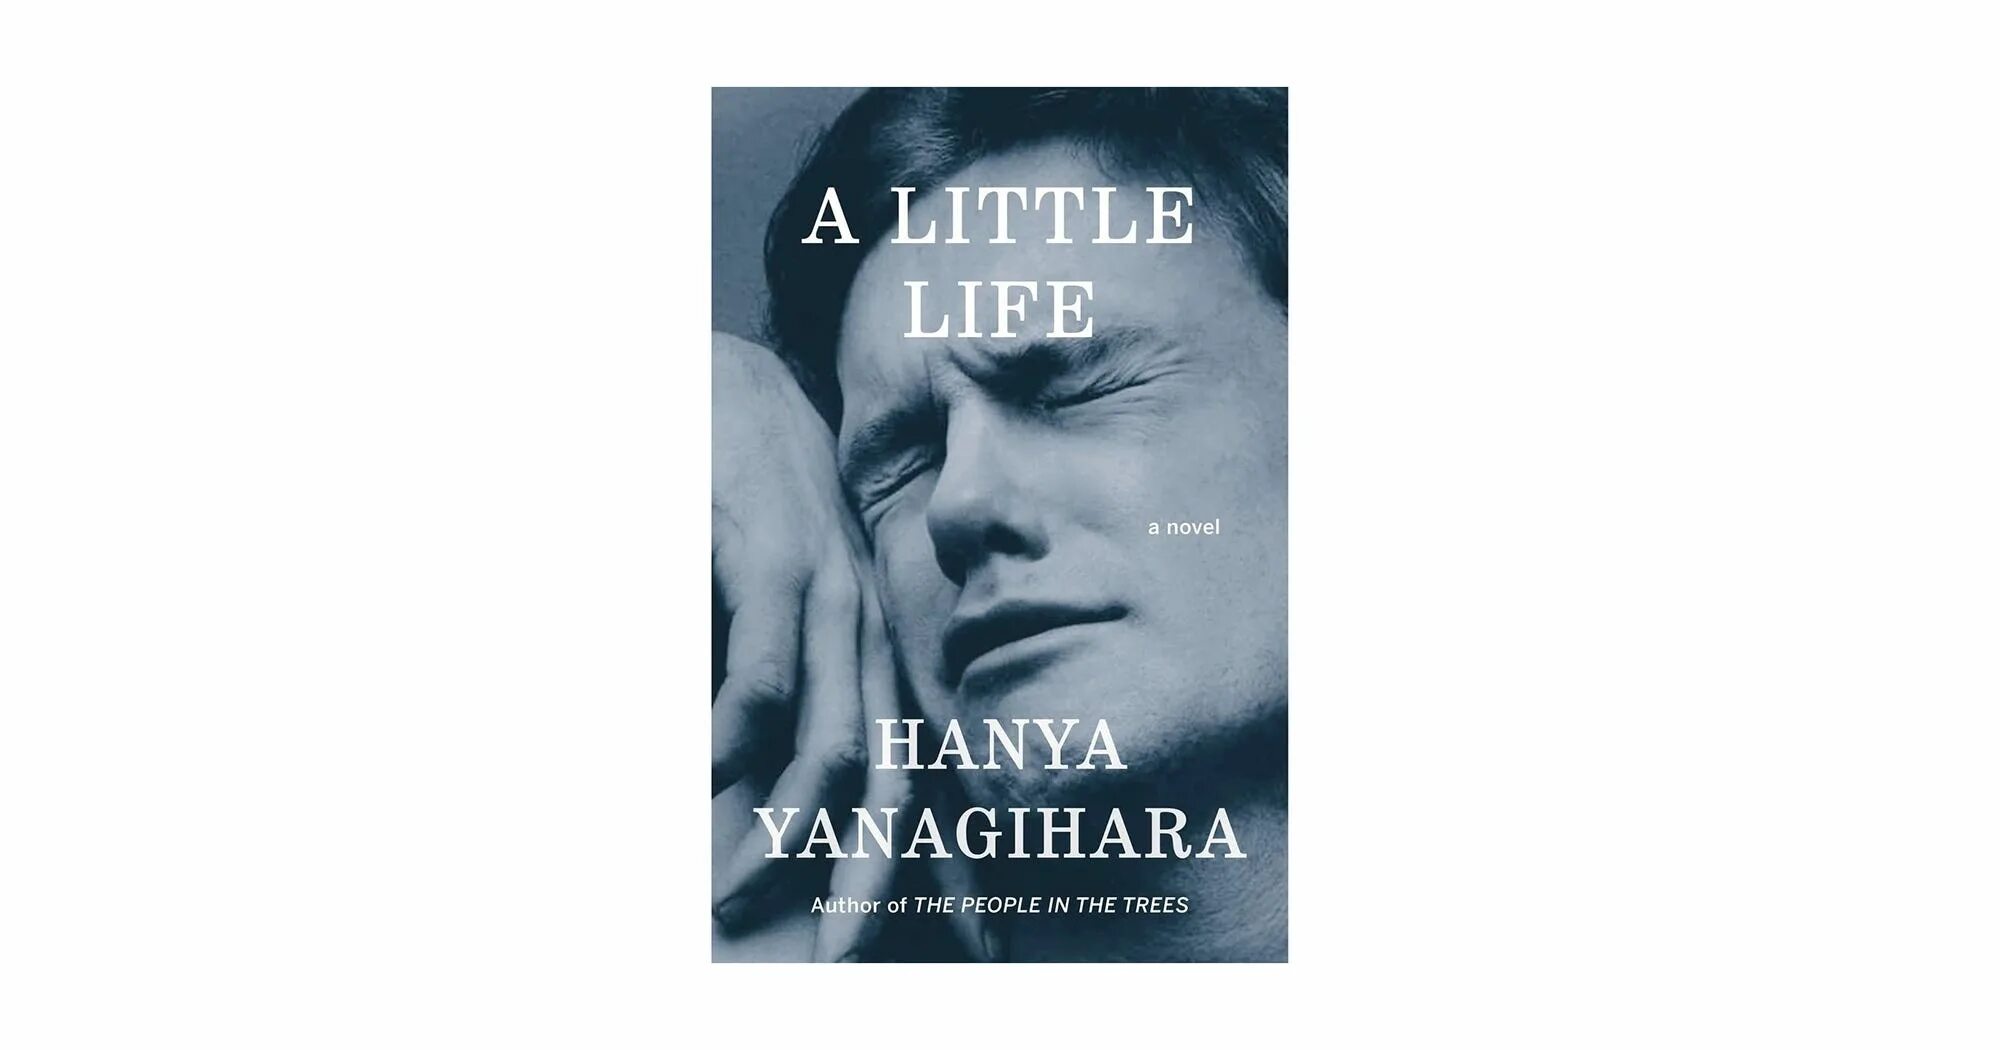 Little life книга. A little Life книга. A little Life hanya Yanagihara. The little Life hanya Yanagihara обложка. Обложка книги a little Life.